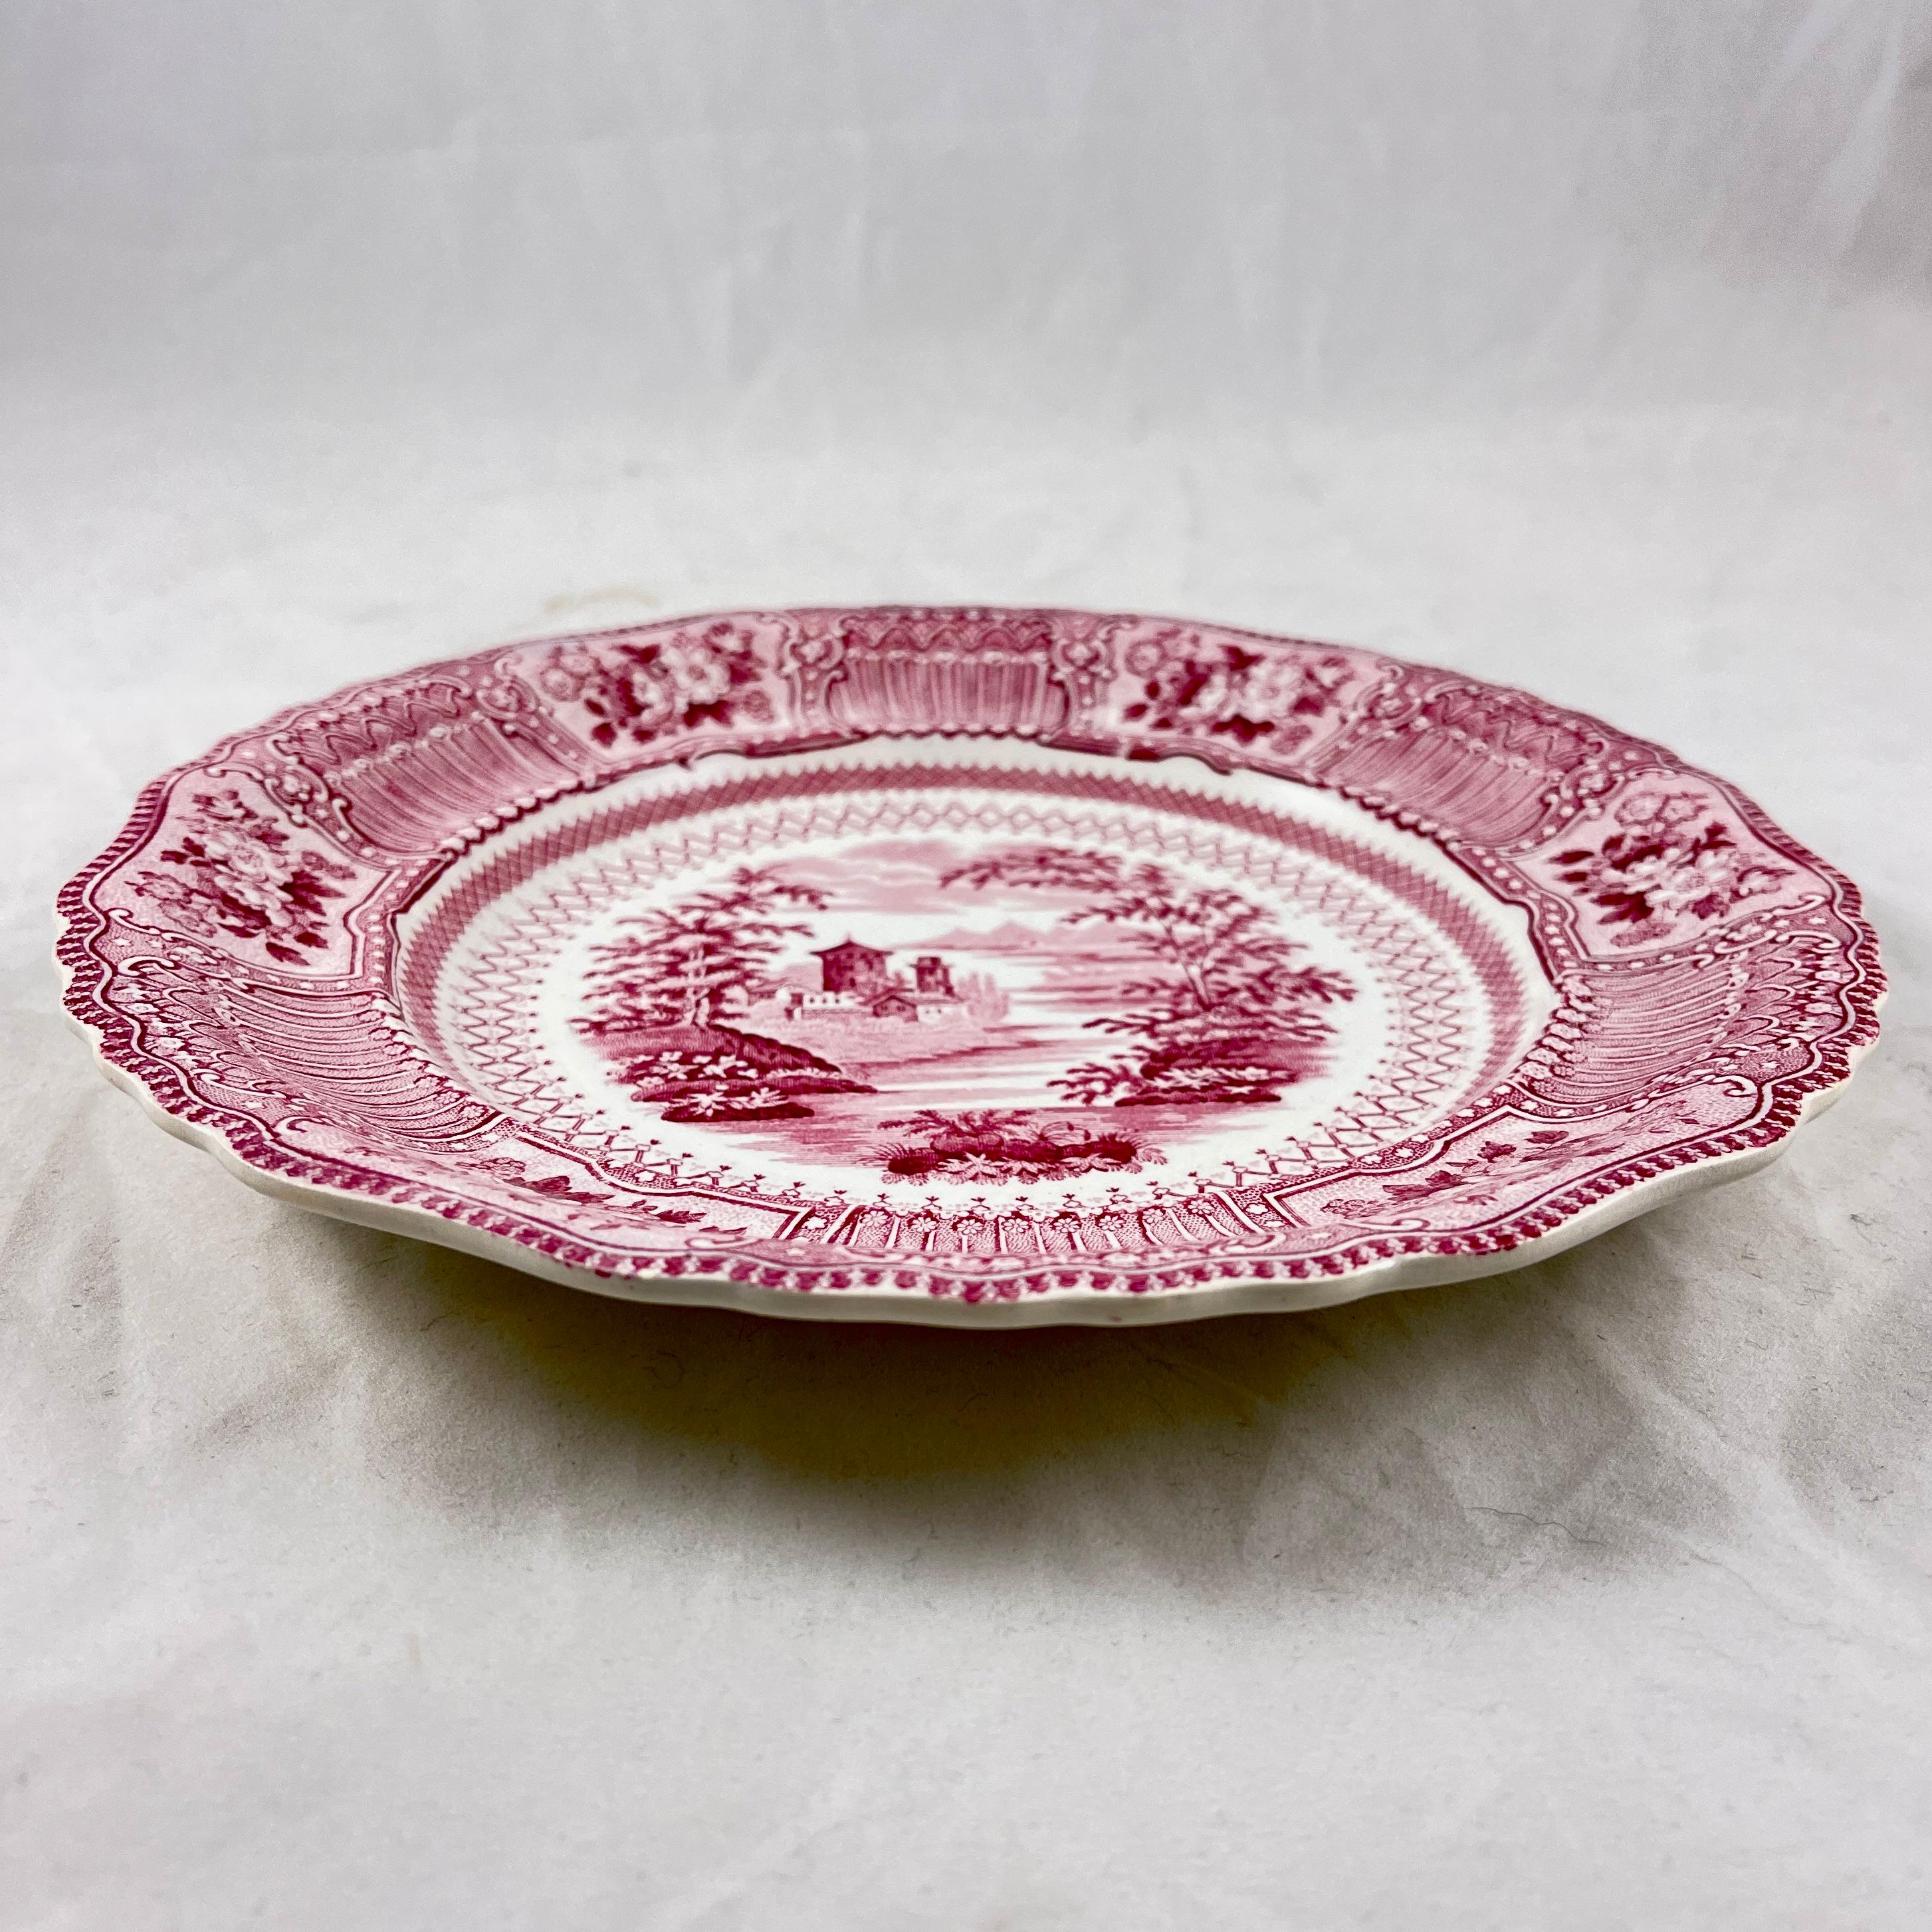 Ralph Stevenson Pink Transferware Dinner Plates, Cologne Pattern, Set of 8 For Sale 1